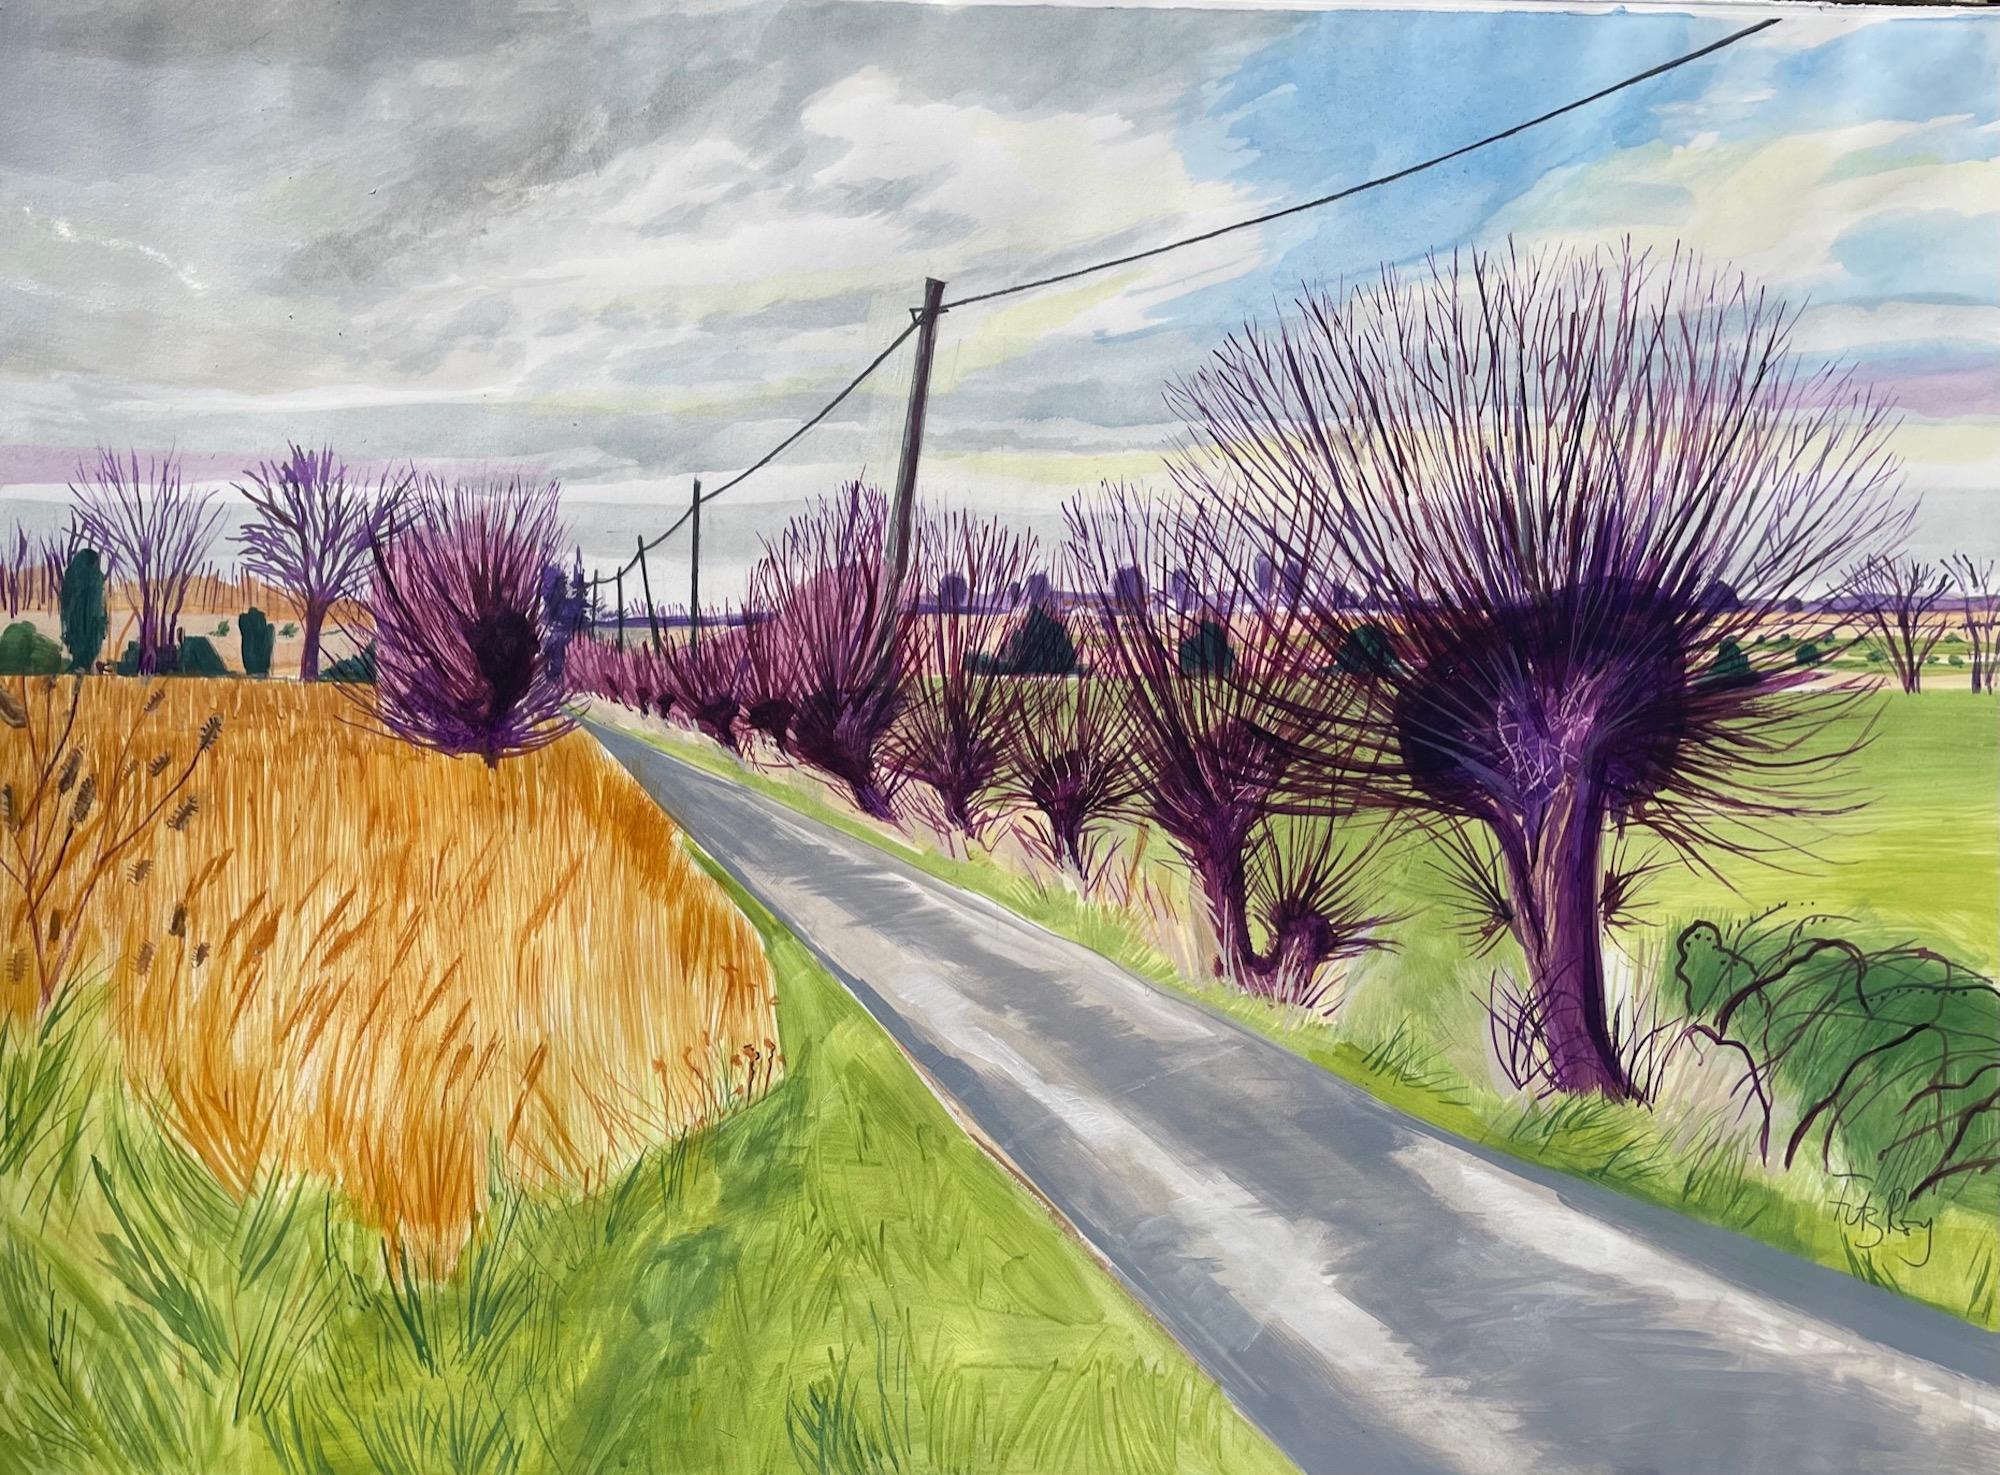 Strada per Reedham, dipinto di paesaggio originale in stile Hockney, arte dell'albero viola